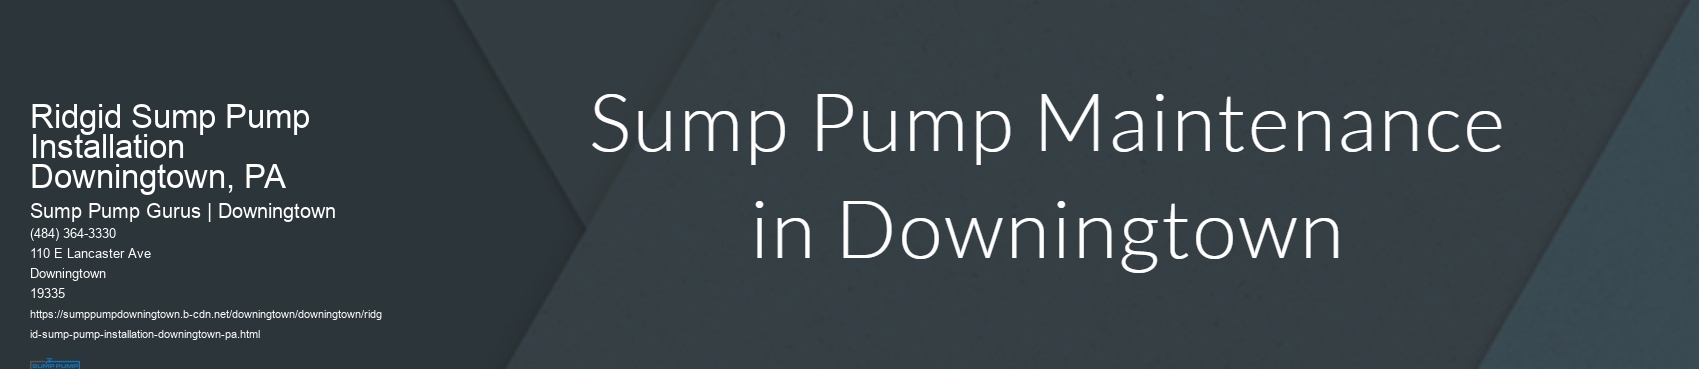 Ridgid Sump Pump Installation Downingtown, PA